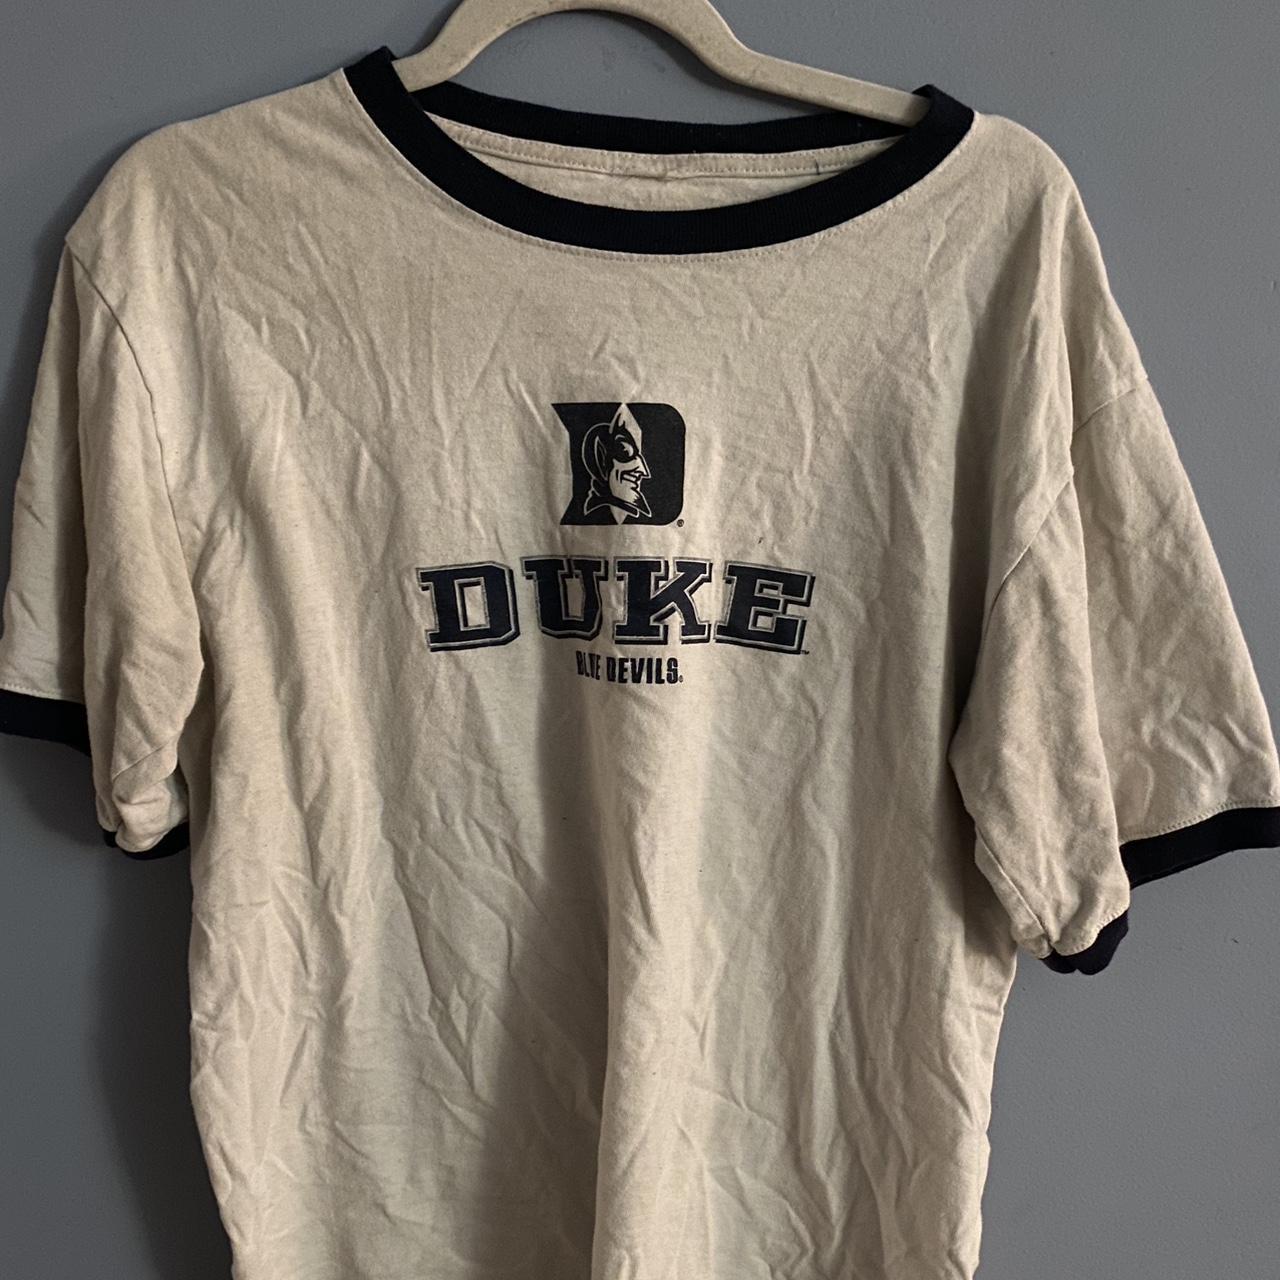 Duke Men's Cream and White T-shirt